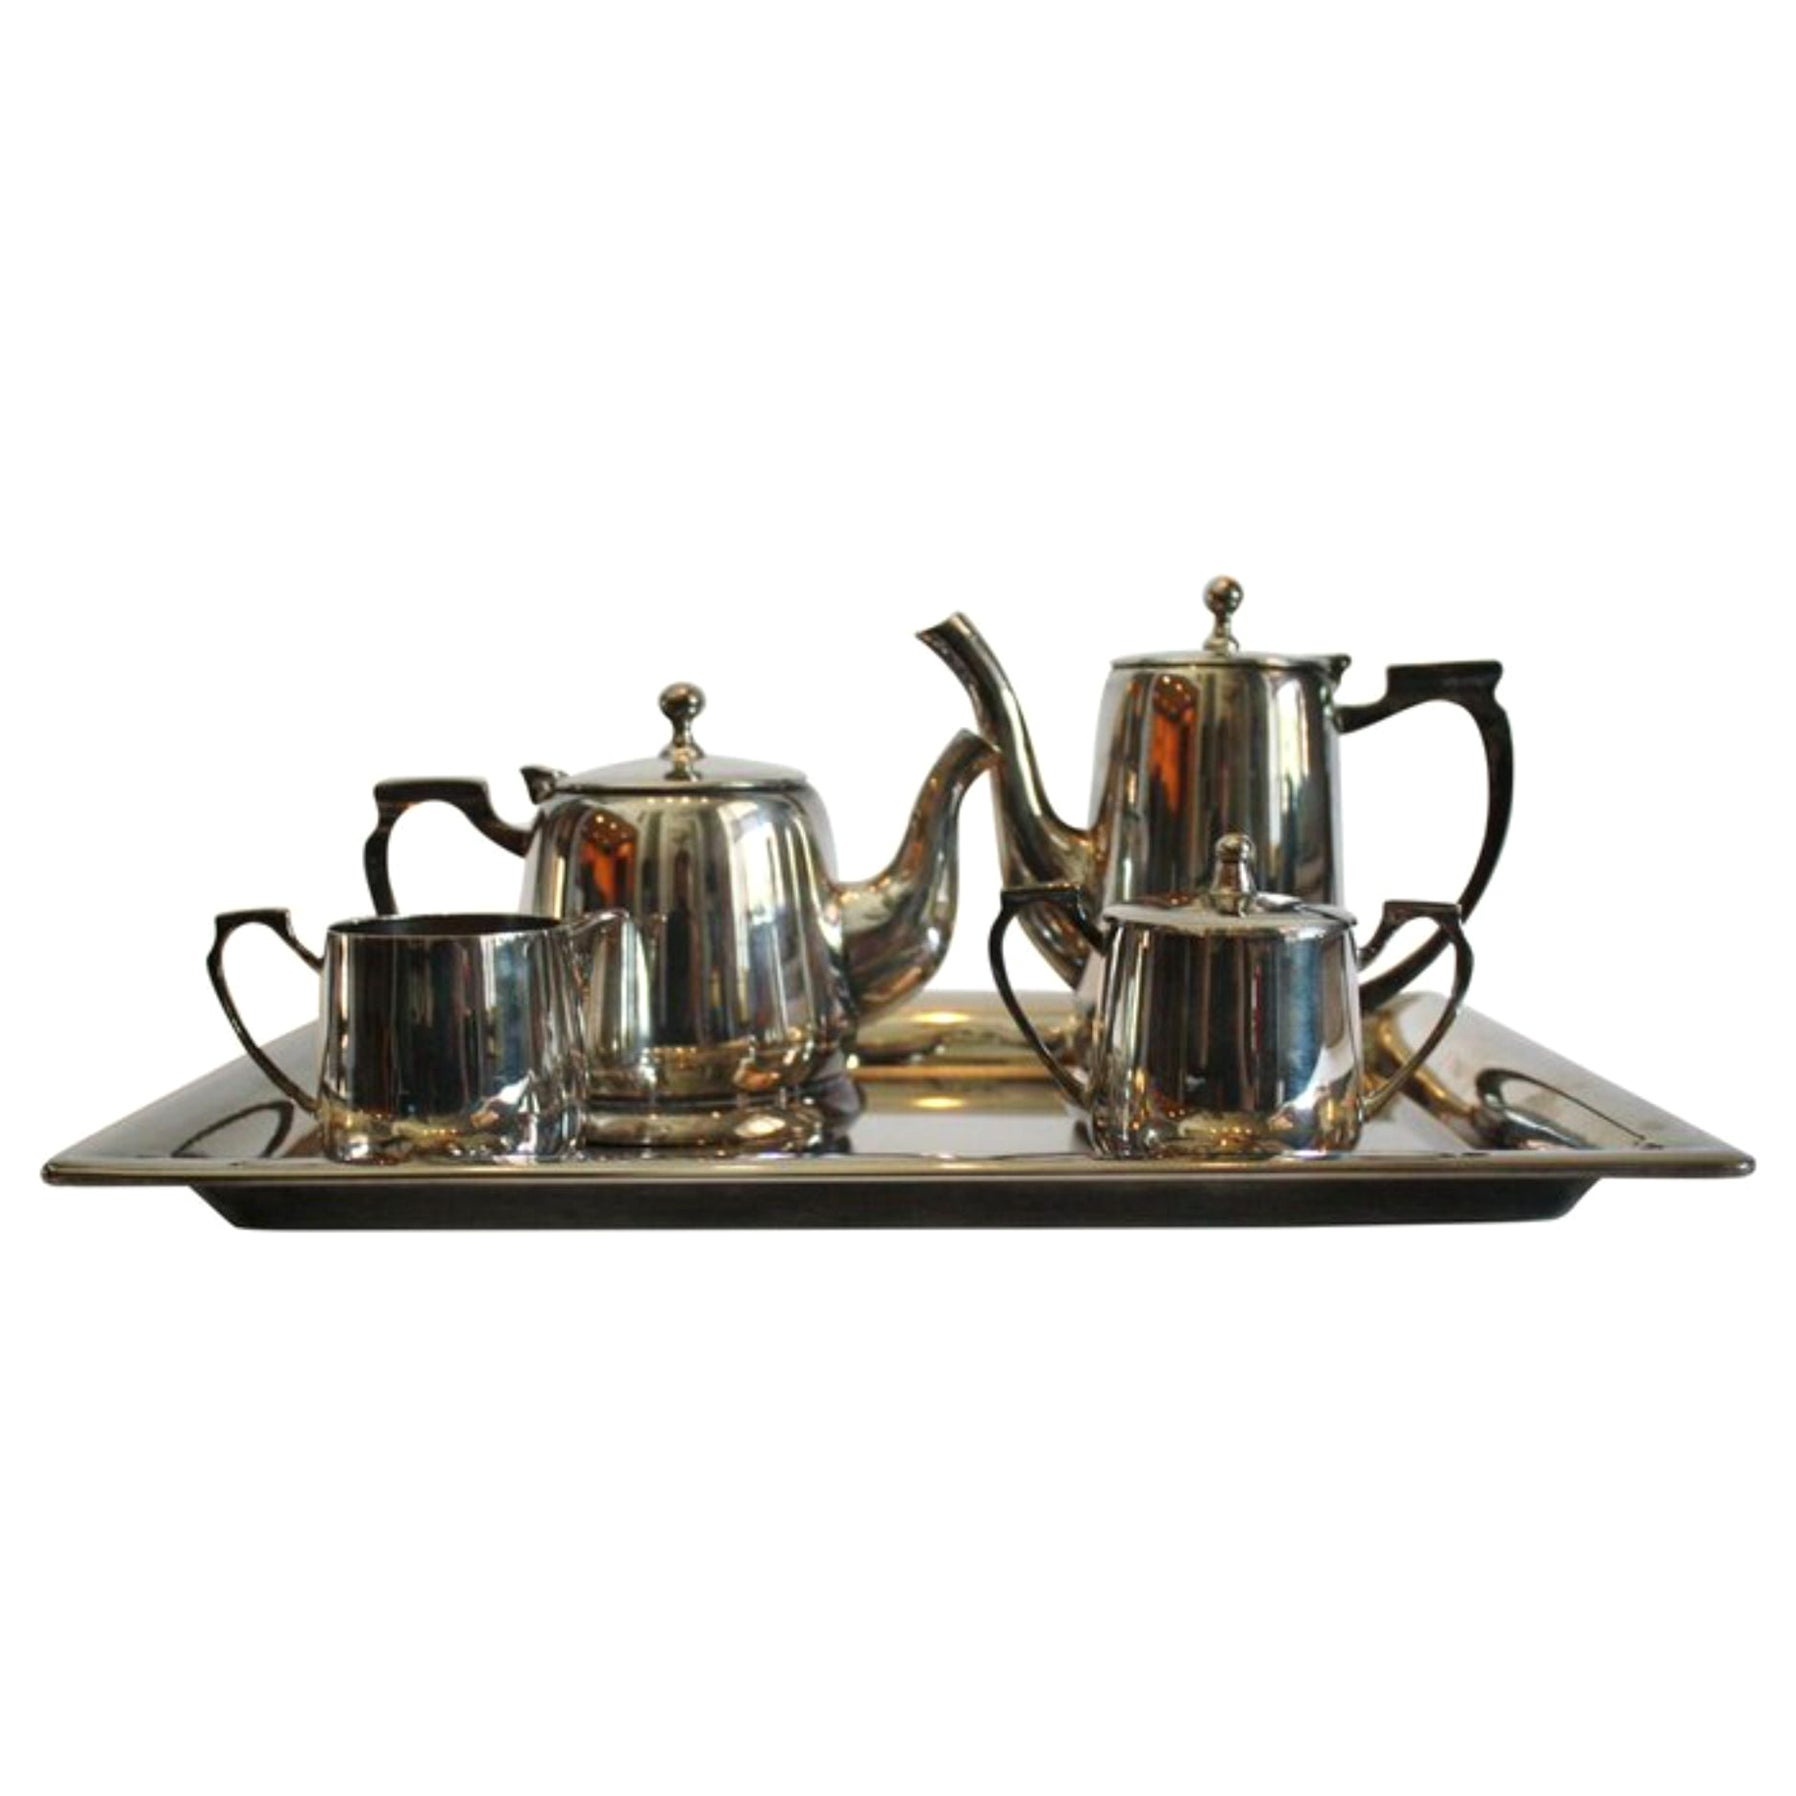 6 Piece Silver- Plated Tea & Coffee Service